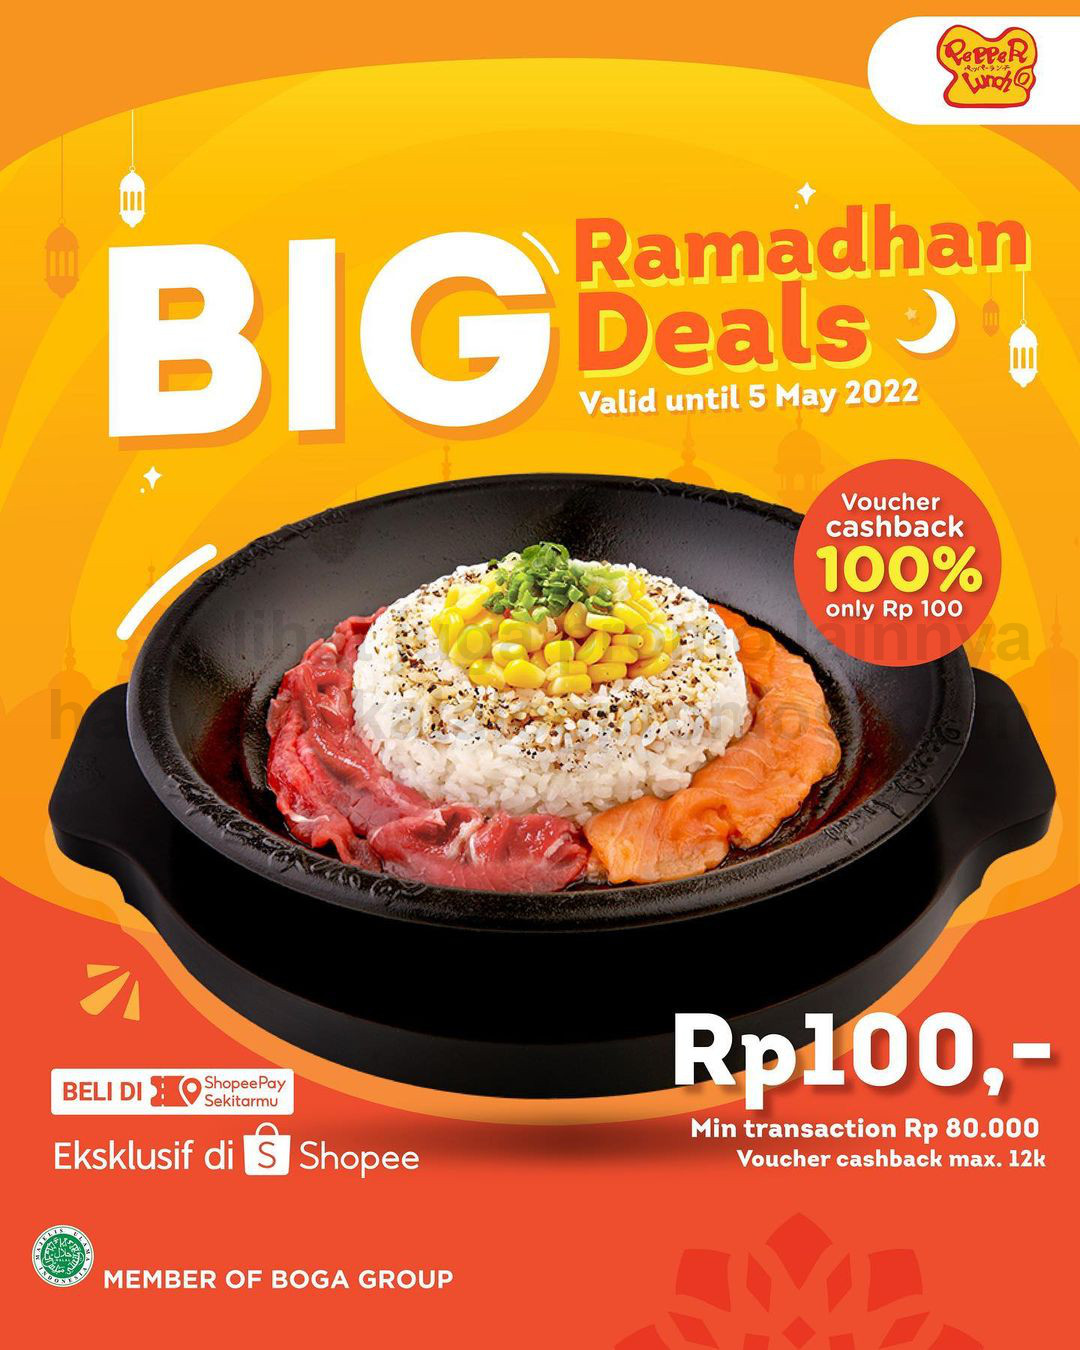 Promo PEPPER LUNCH BIG Ramadhan Deals! VOUCHER CASHBACK SHOPEEPAY 100% cuma Rp. 100 saja